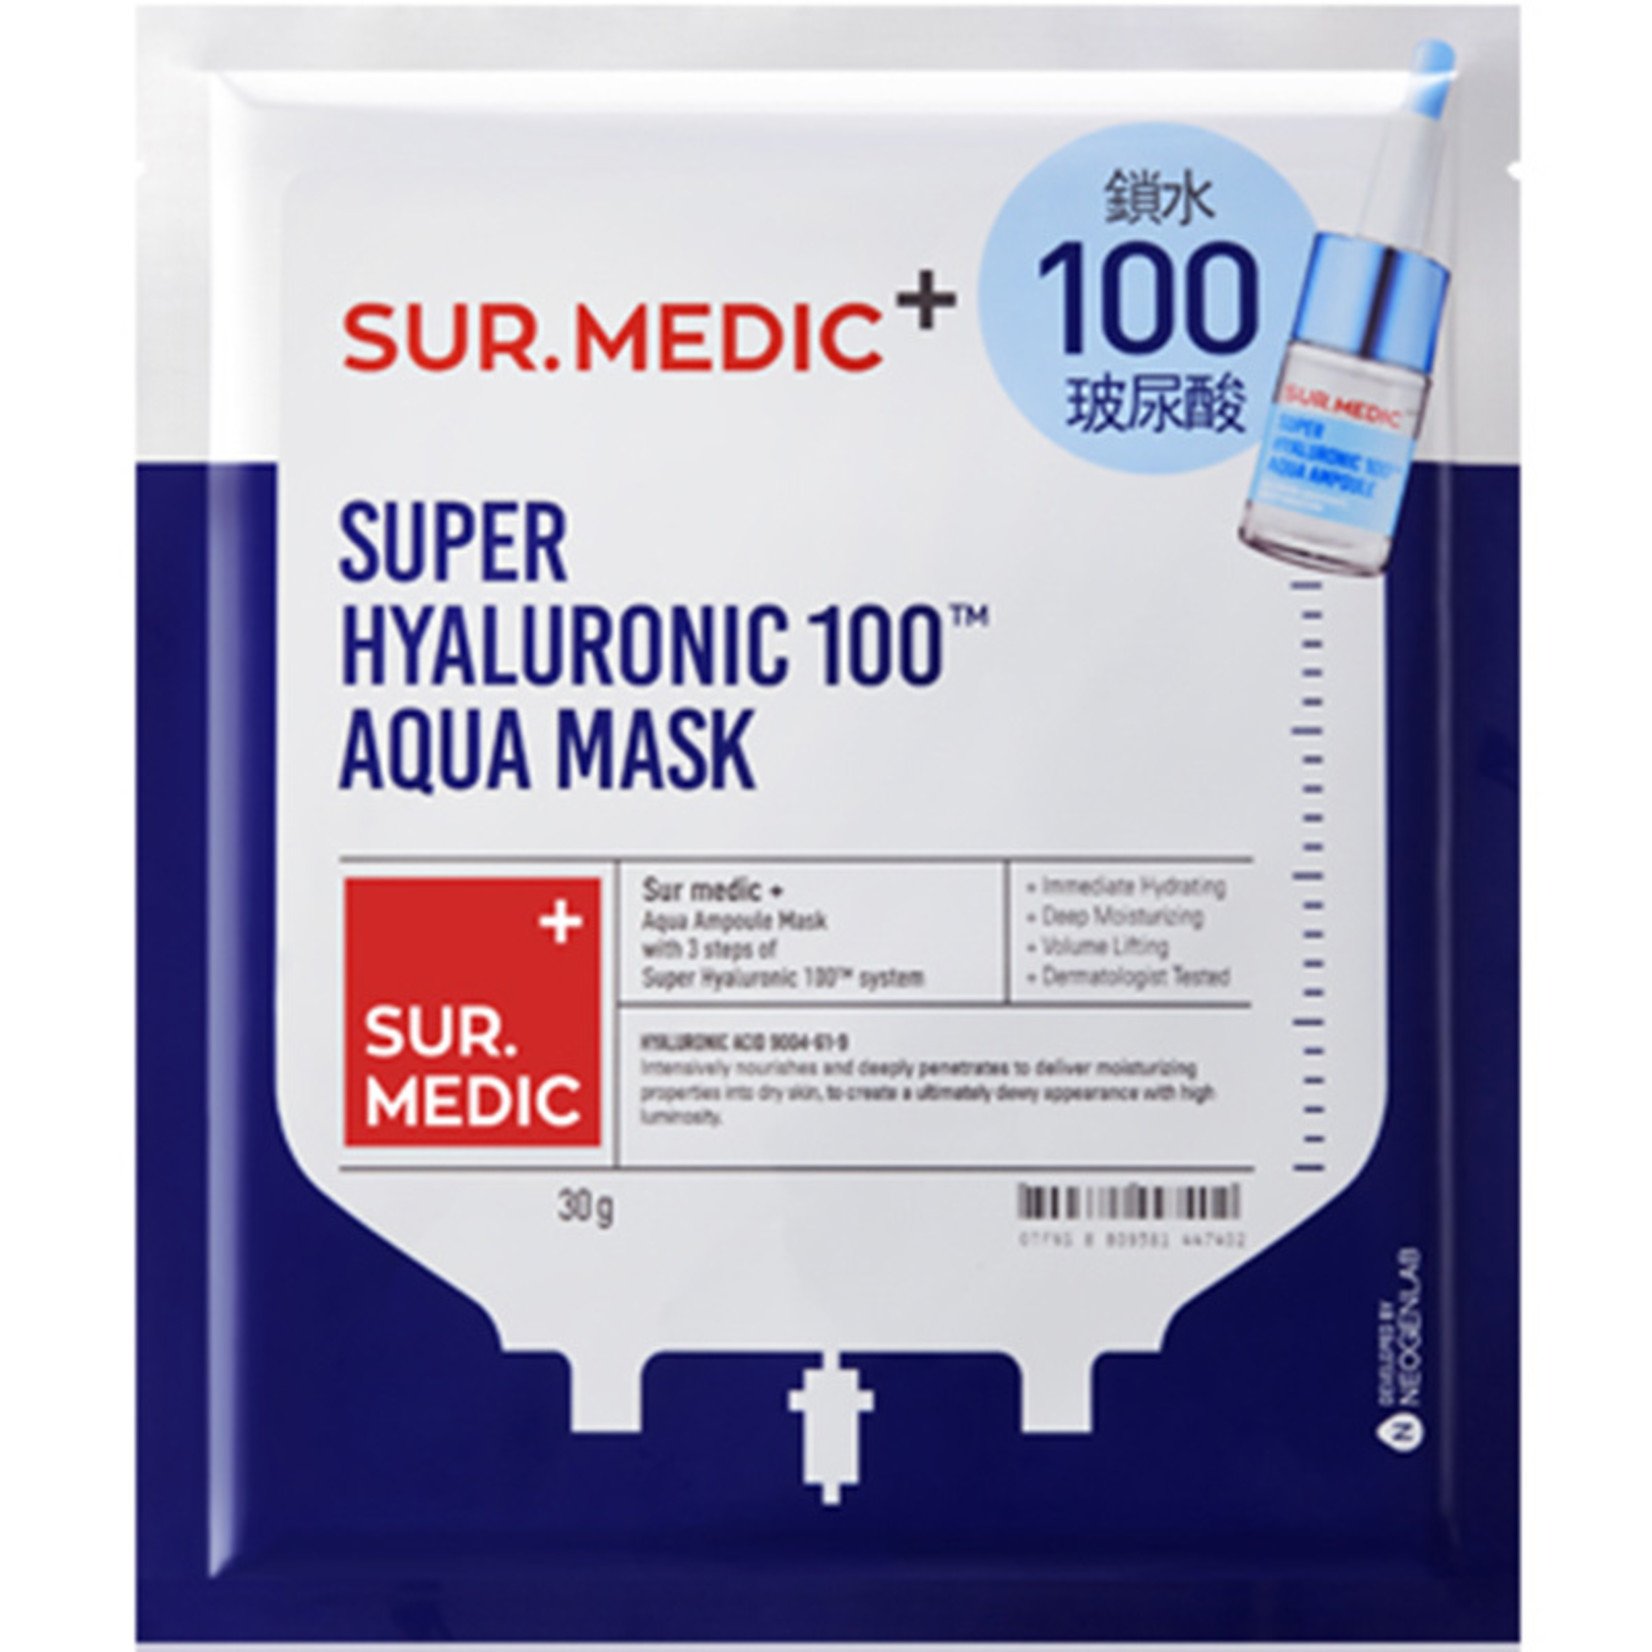 NEOGEN Surmedic Super Hyaluronic 100 Aqua Mask